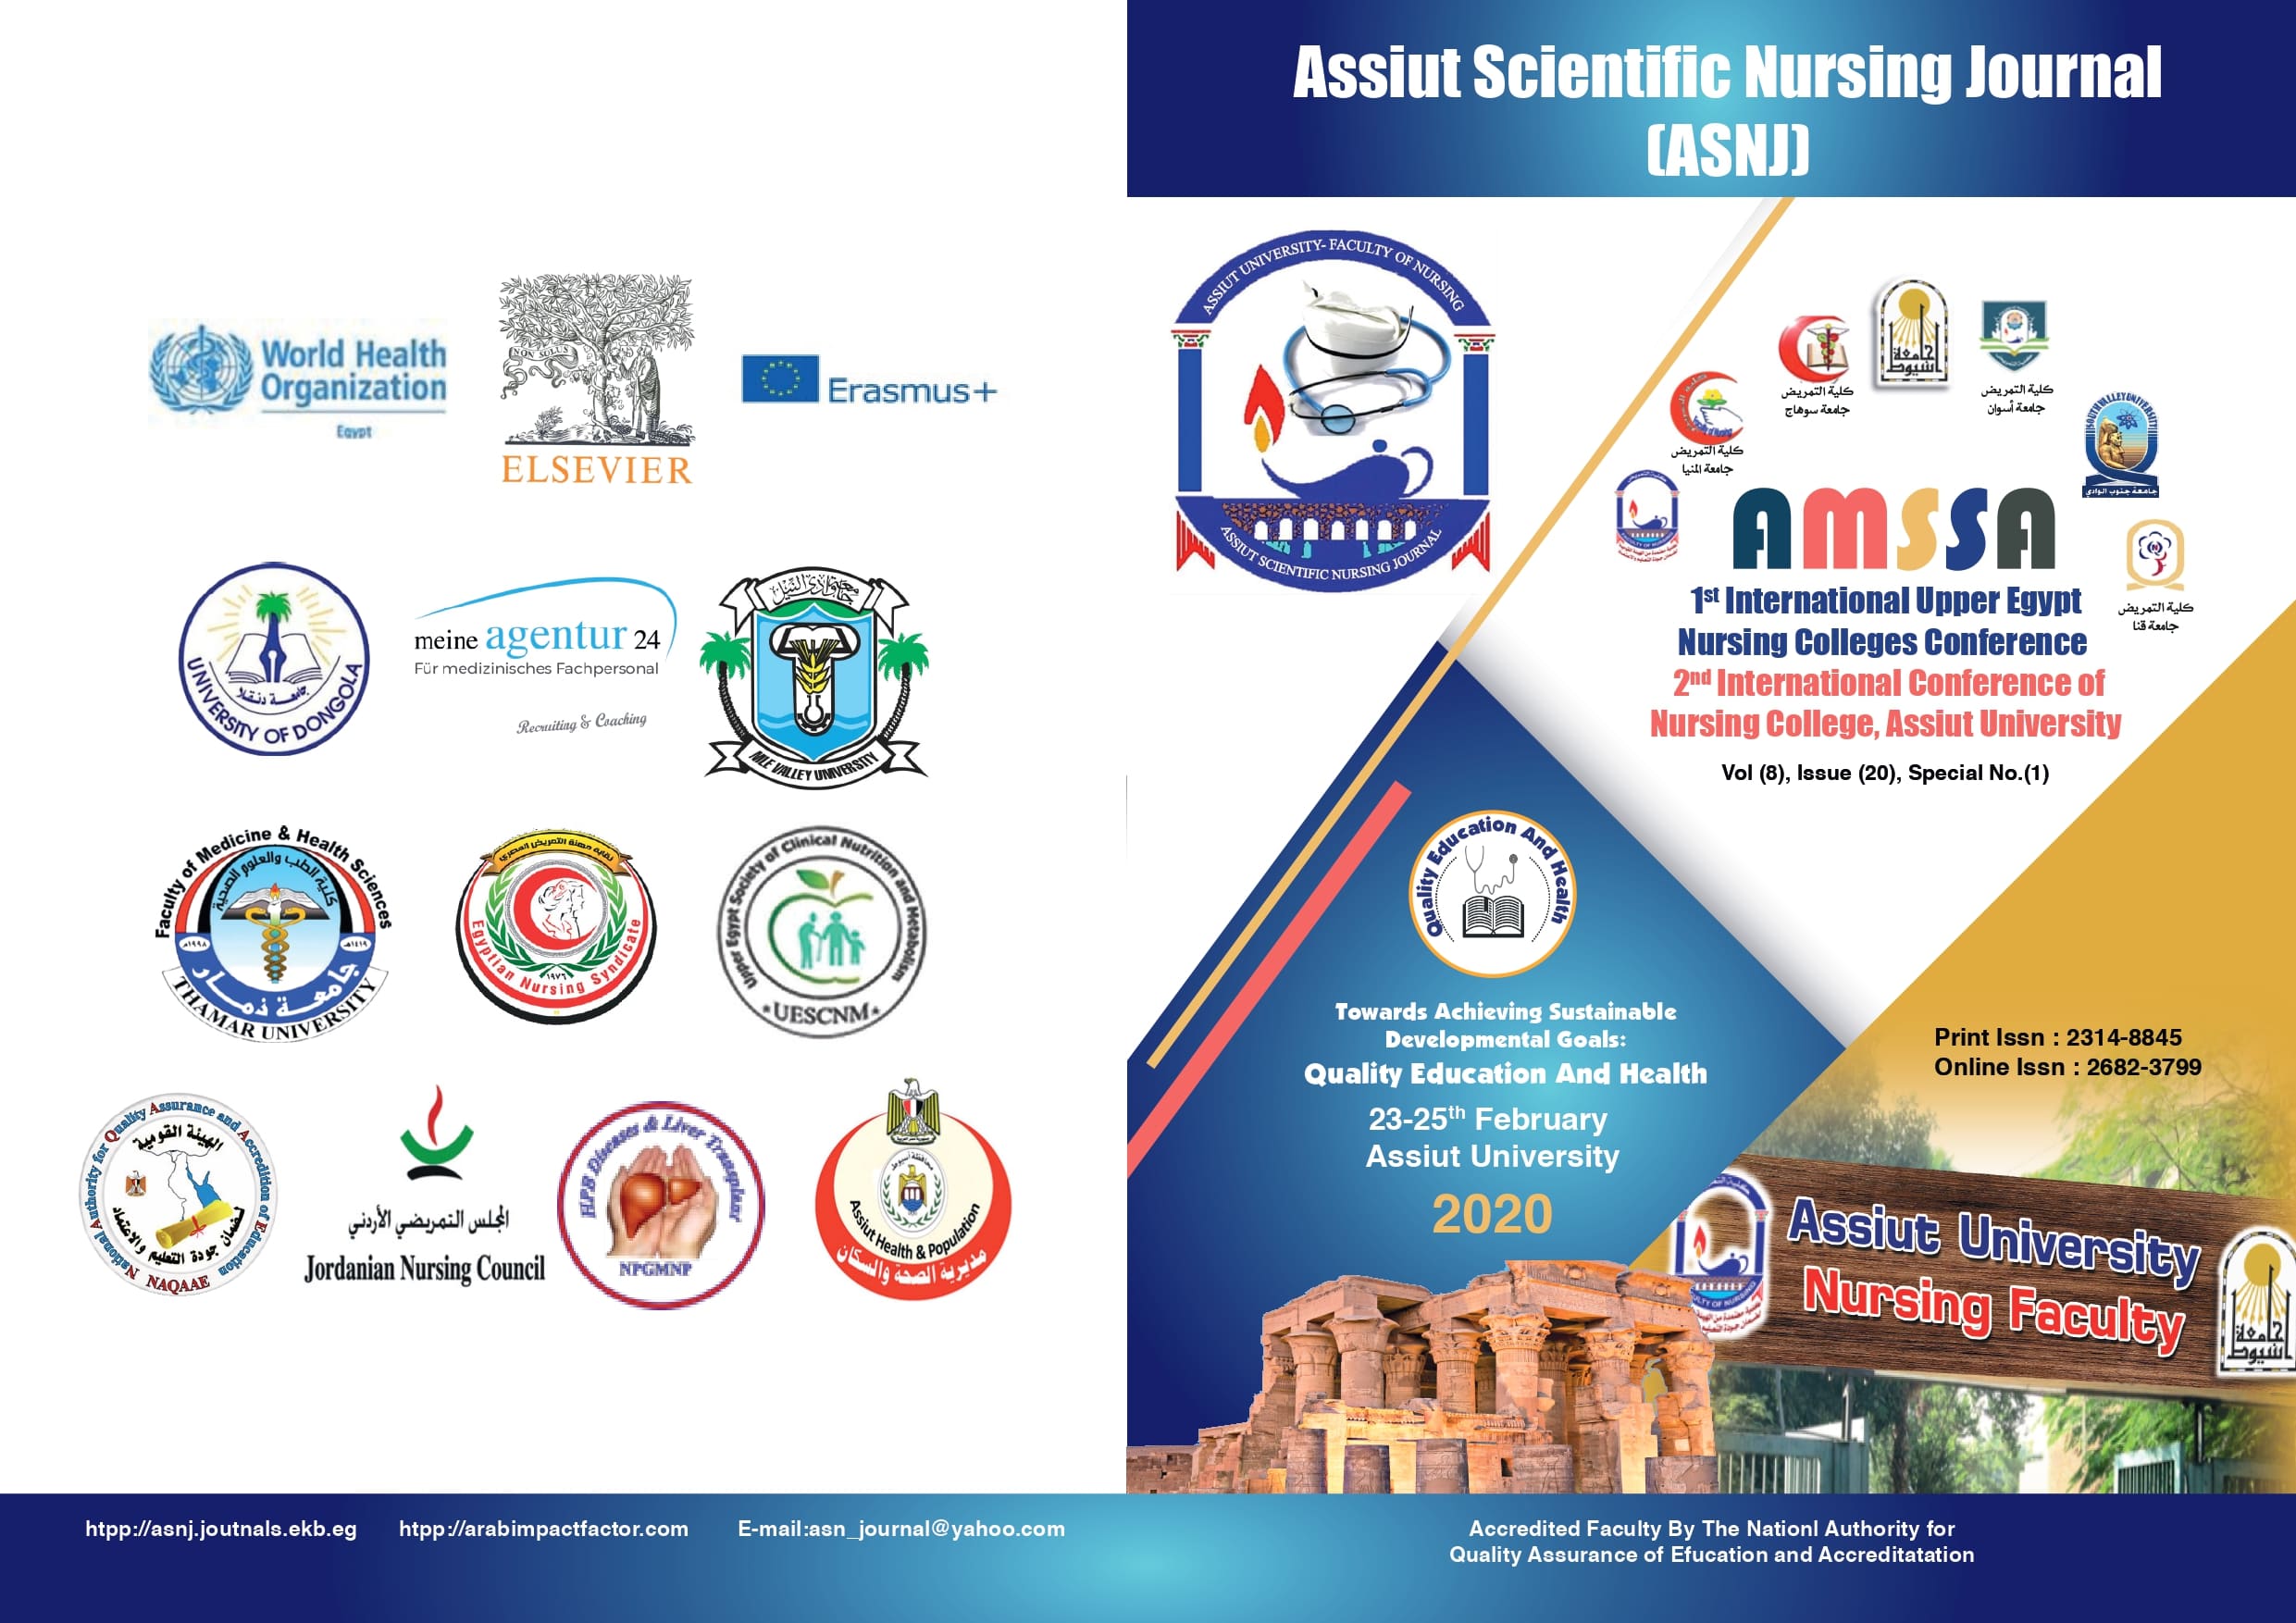 Assiut Scientific Nursing Journal